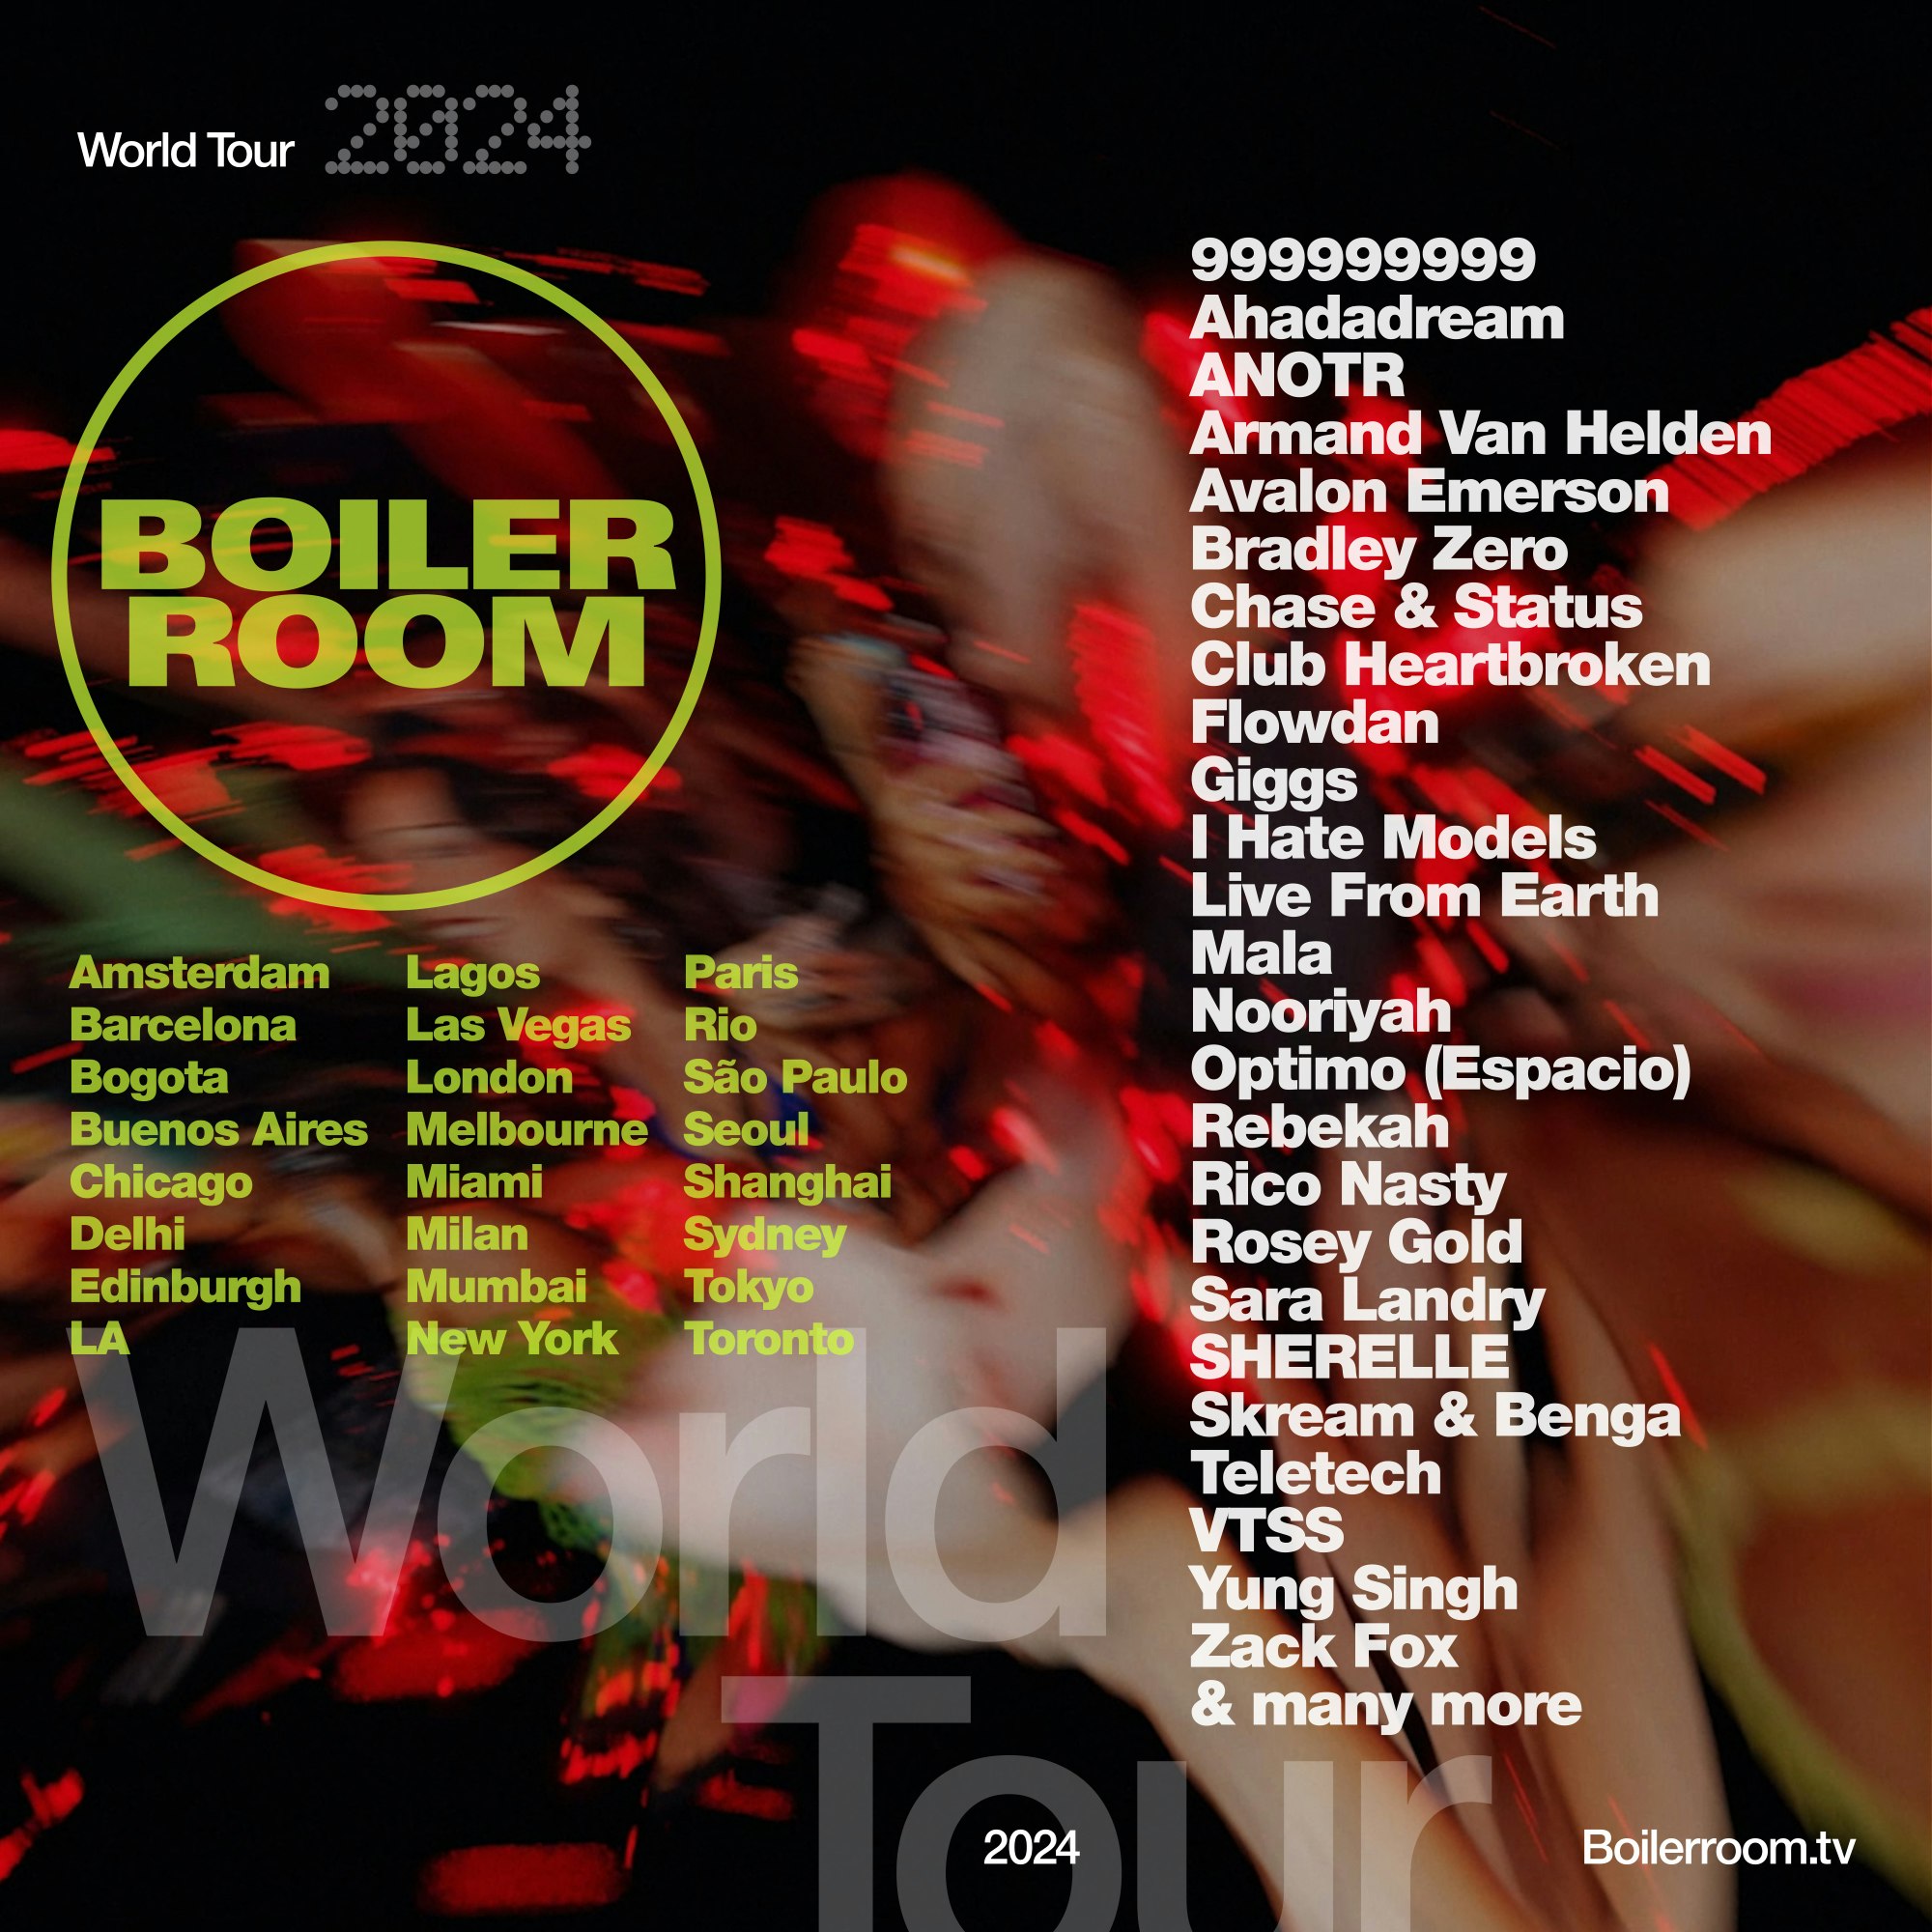 BOILER ROOM WORLD TOUR 2024 DICE